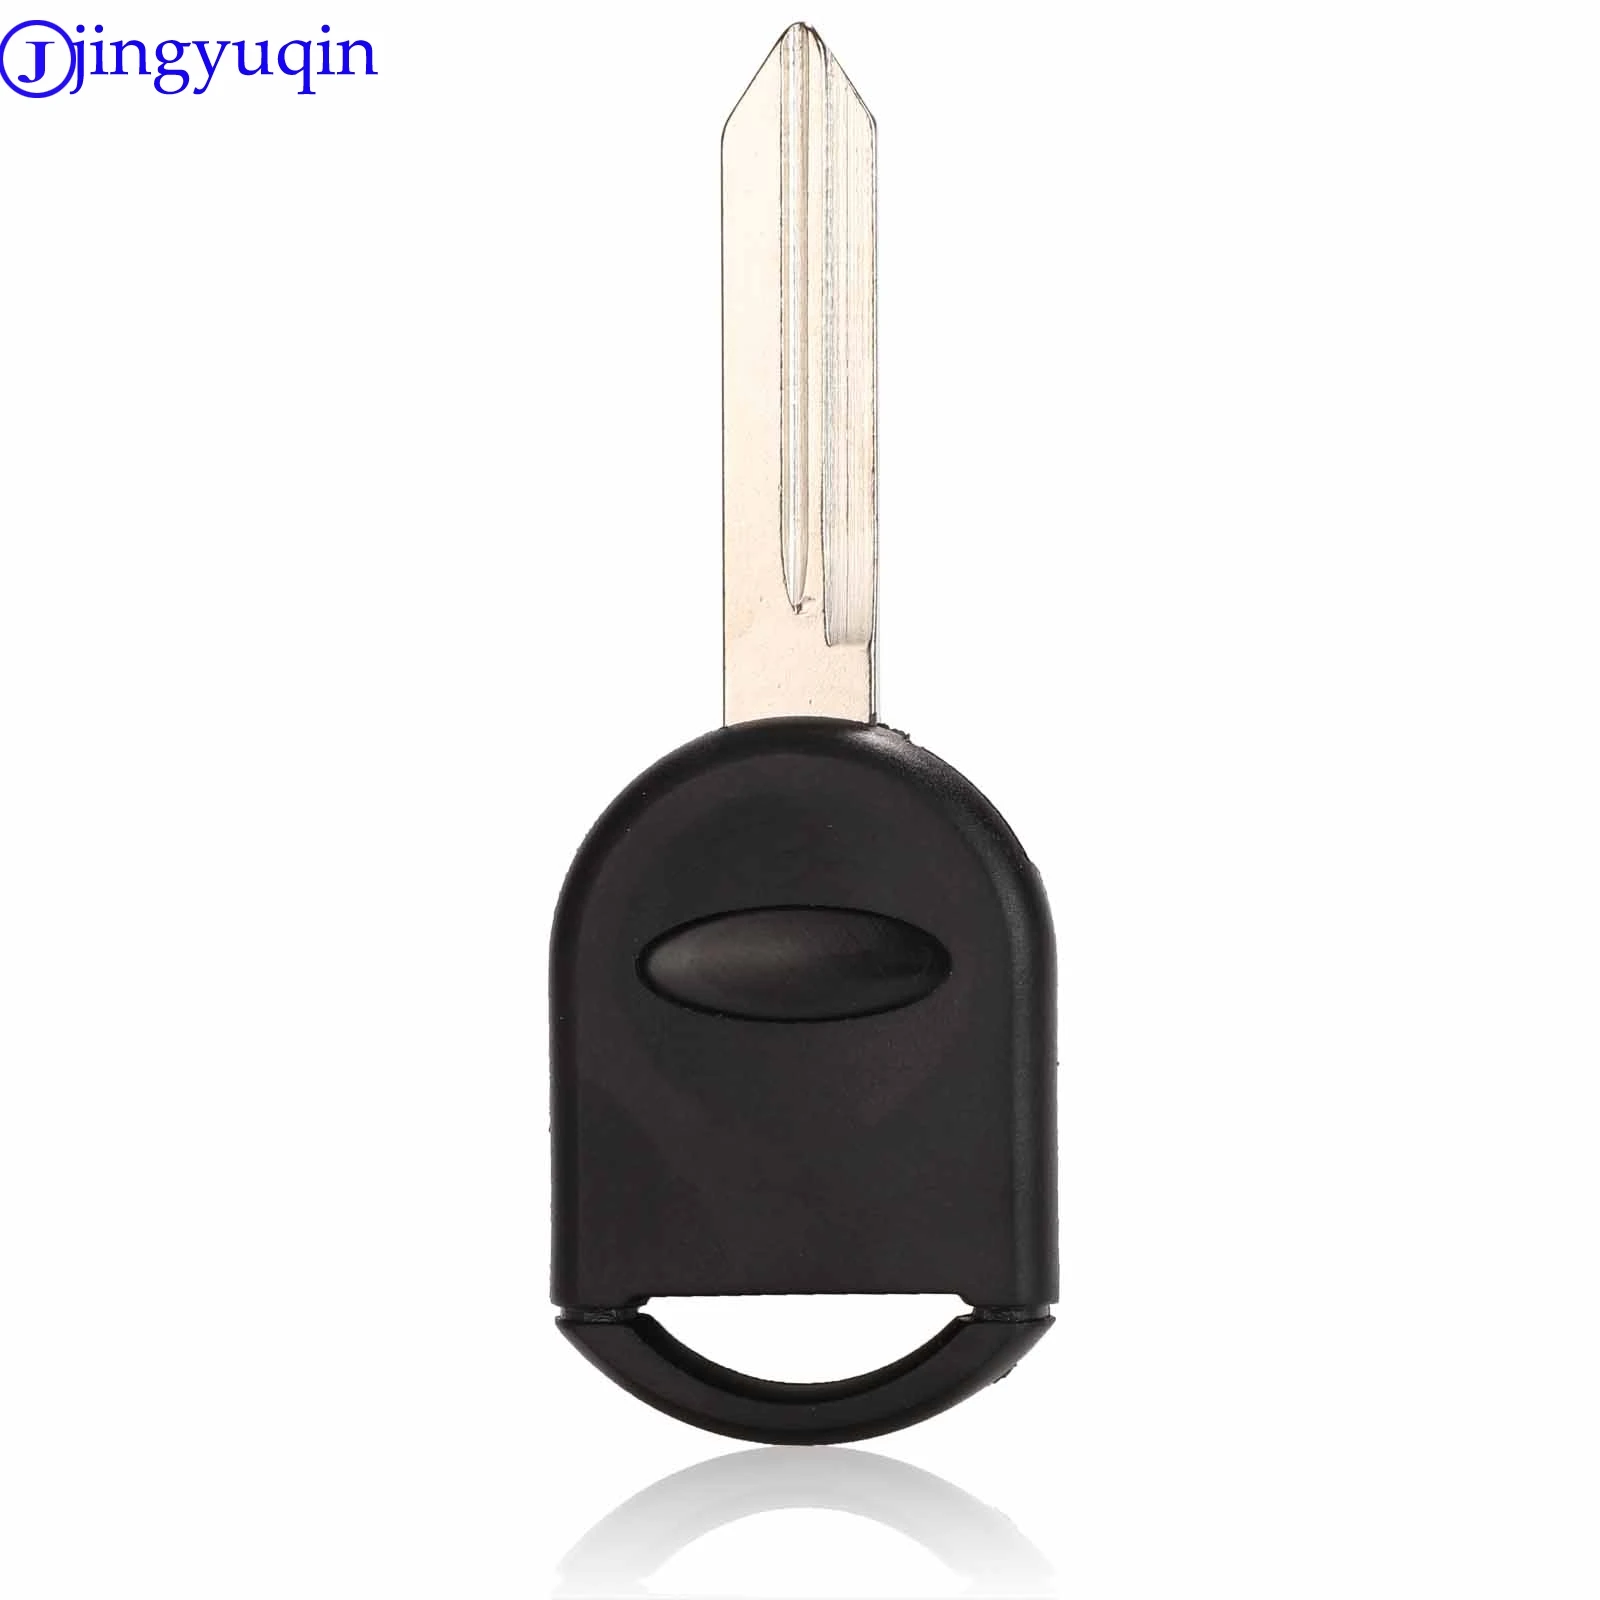 Jingyuqin 10 шт. без чипа Автомобильный Транспондер ключ оболочка чехол для Ford Lincoln Mercury ключ пустой чехол(можно установить чип